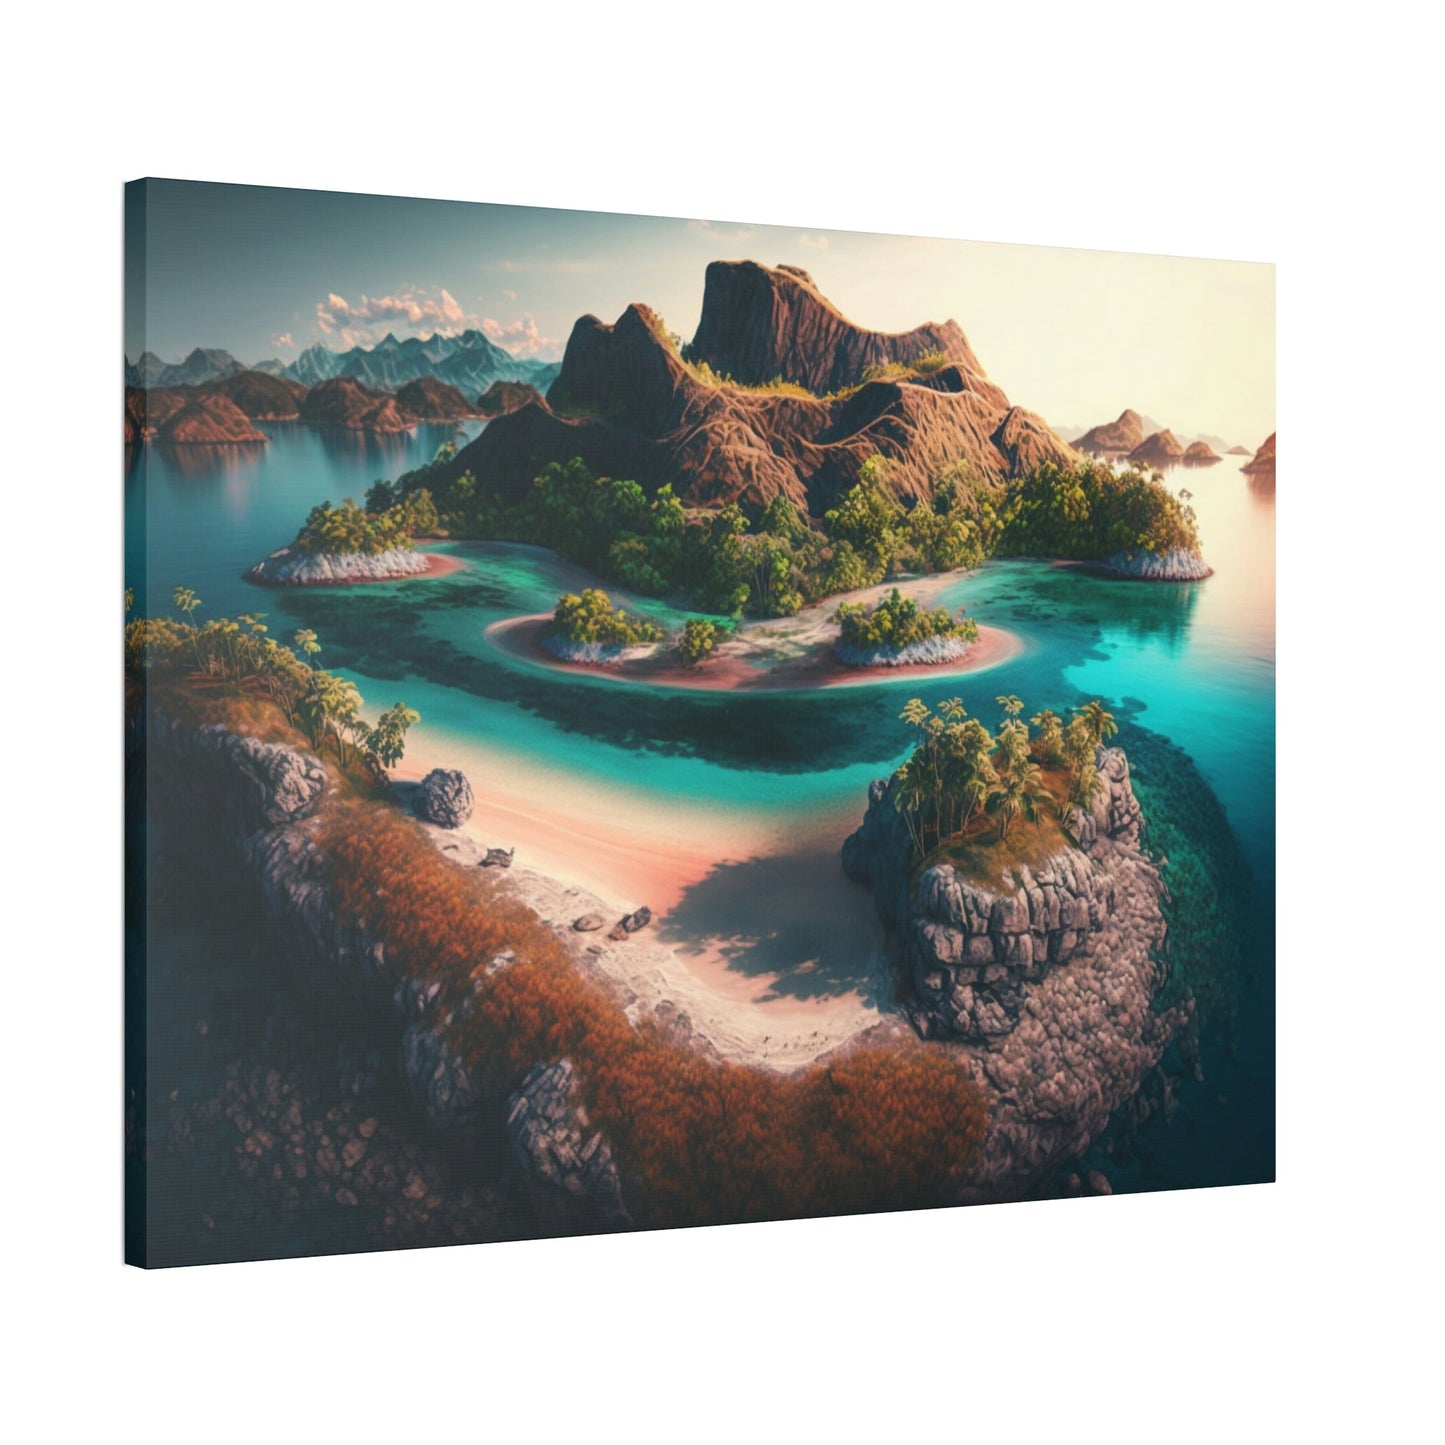 Island Dreams: A Colorful Tropical Scene on Canvas